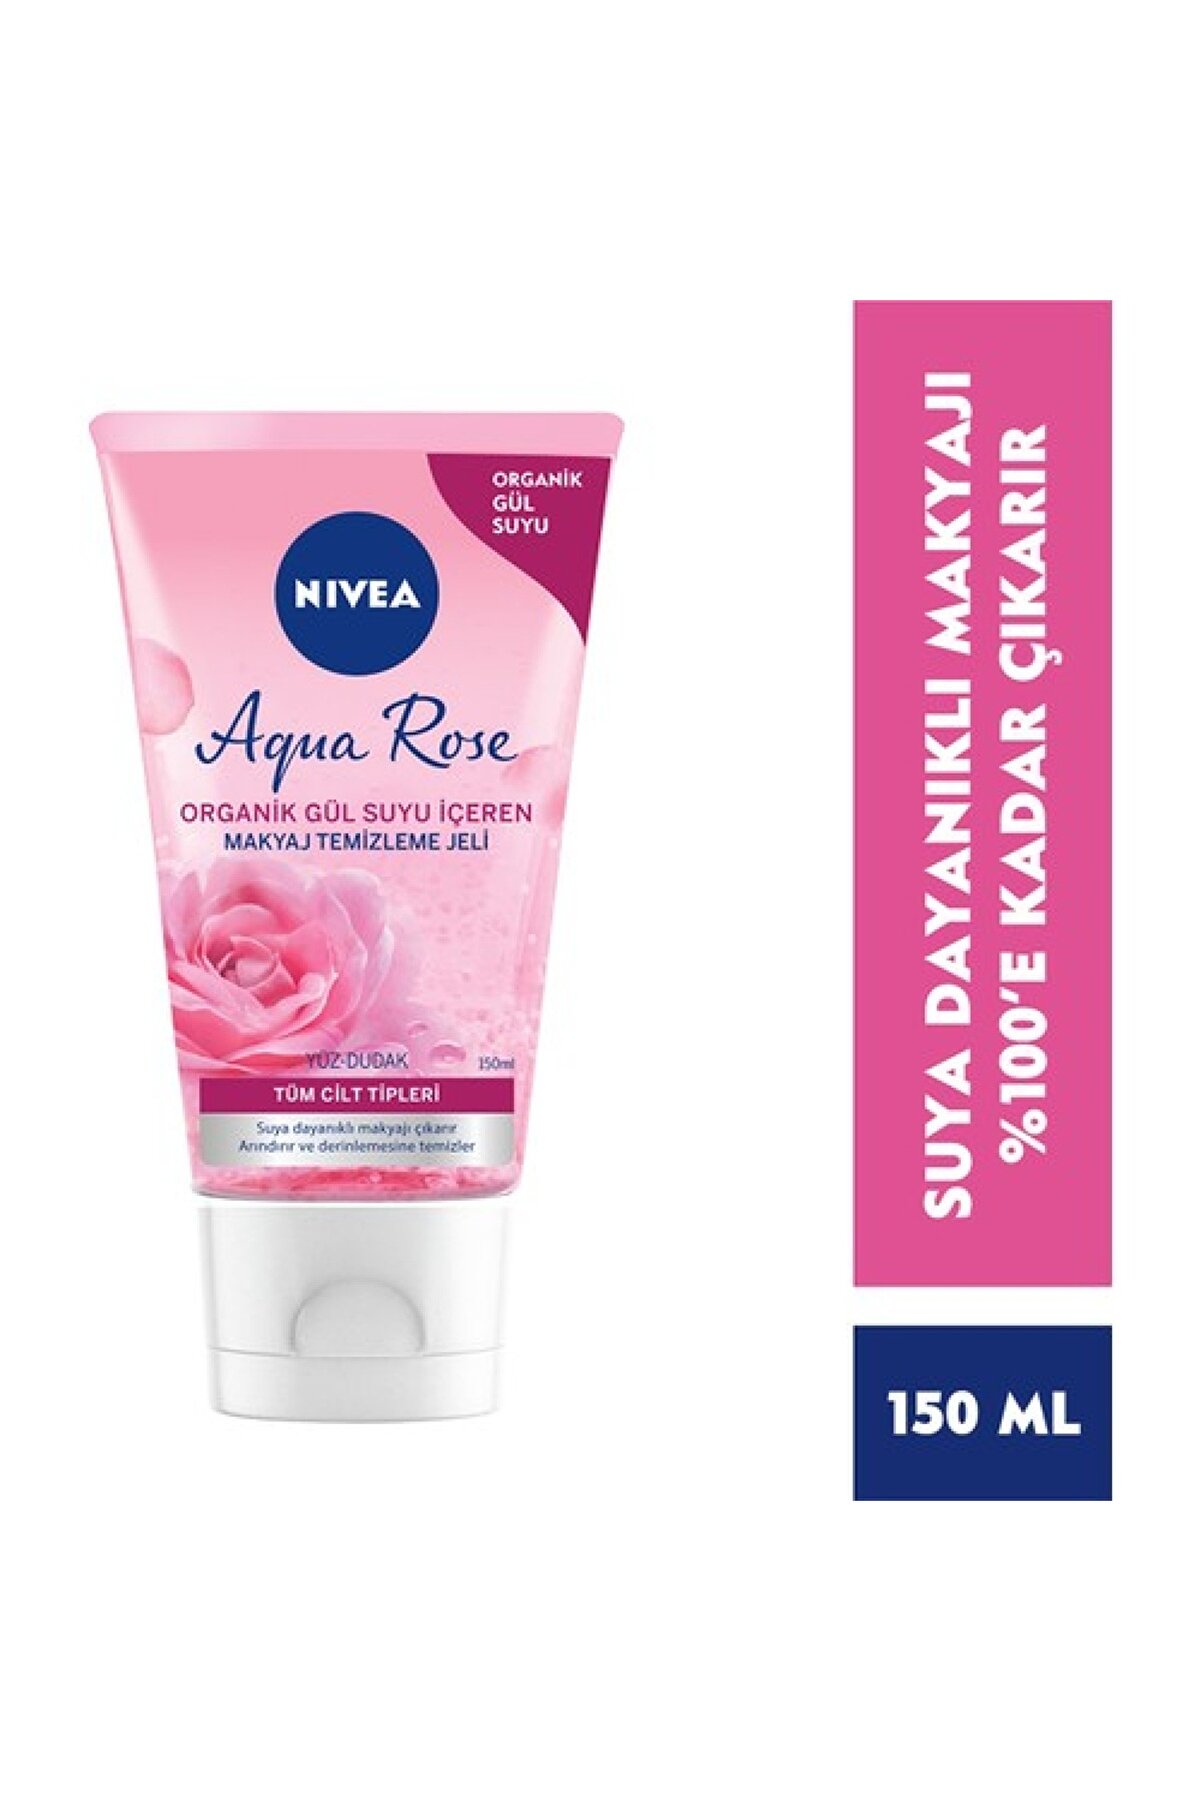 NIVEA Aqua Rose Organik Gül Suyu Içeren Makyaj Temizleme Jeli 150ml